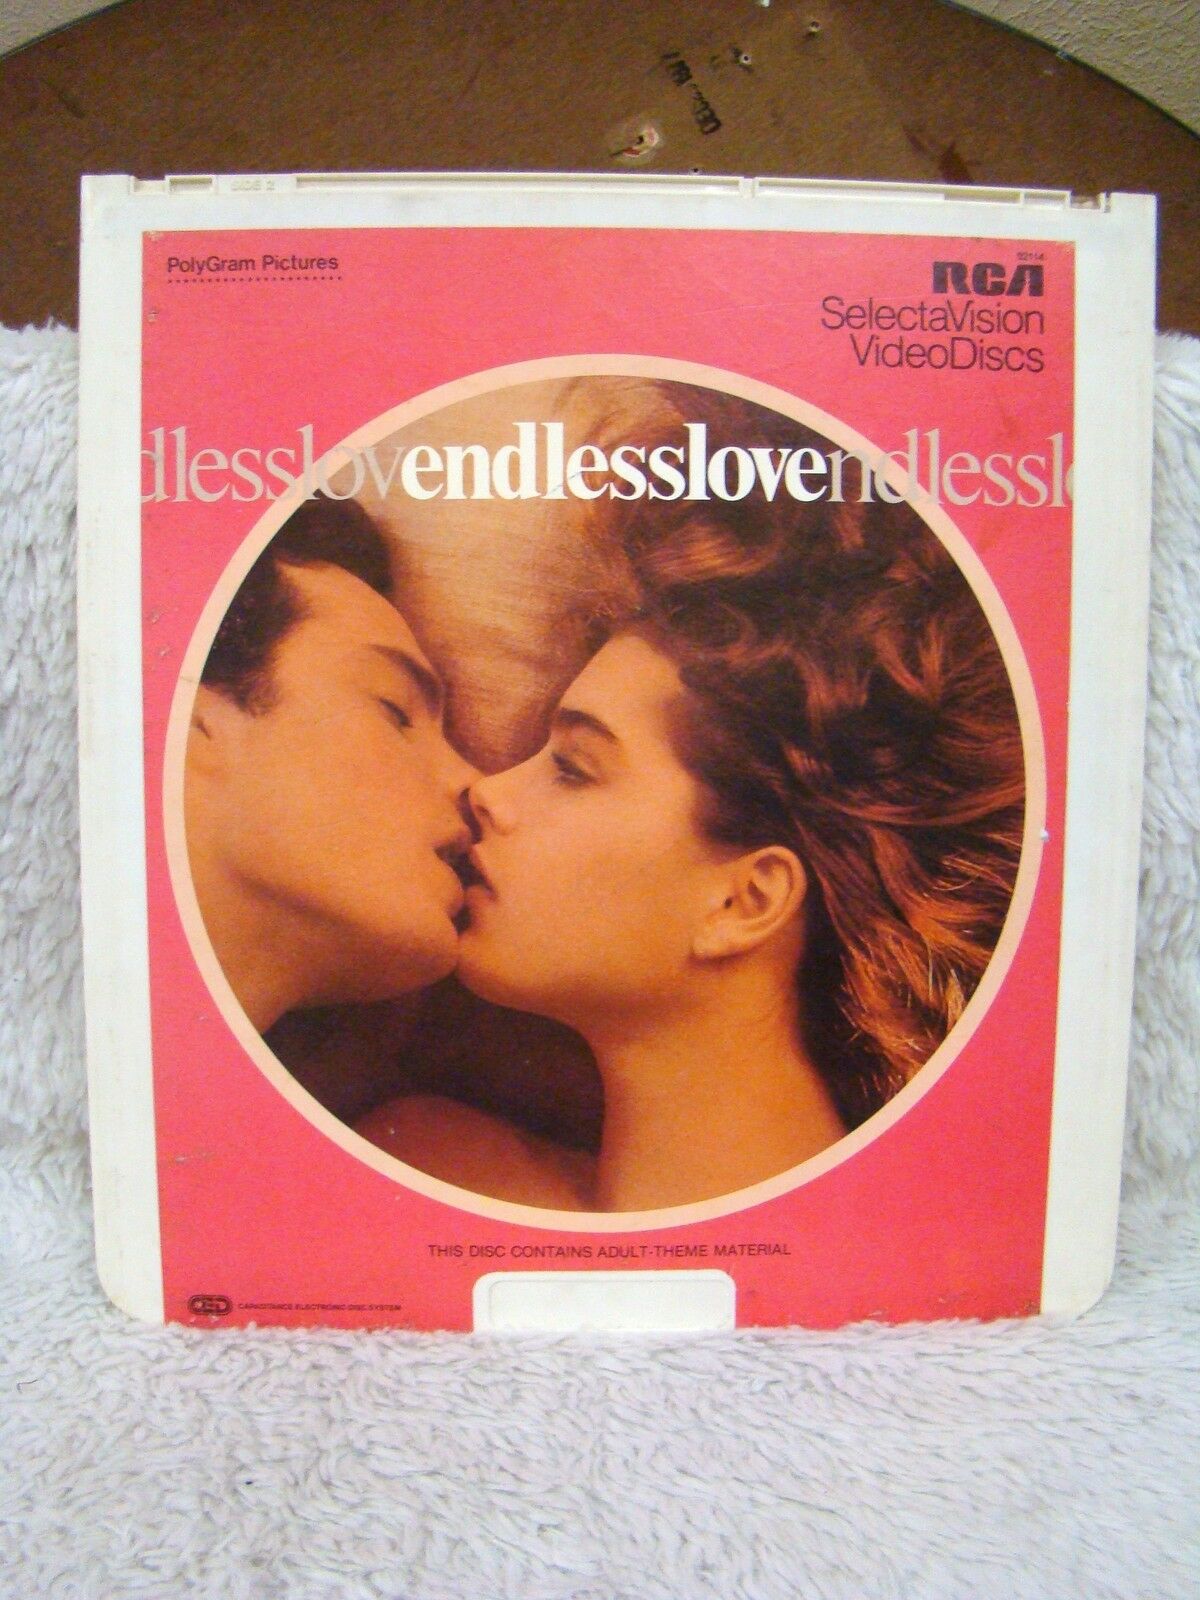 Ced Videodisc Endless Love (1981) Brooke Shields Polygram Pics, Rca Selectavisn